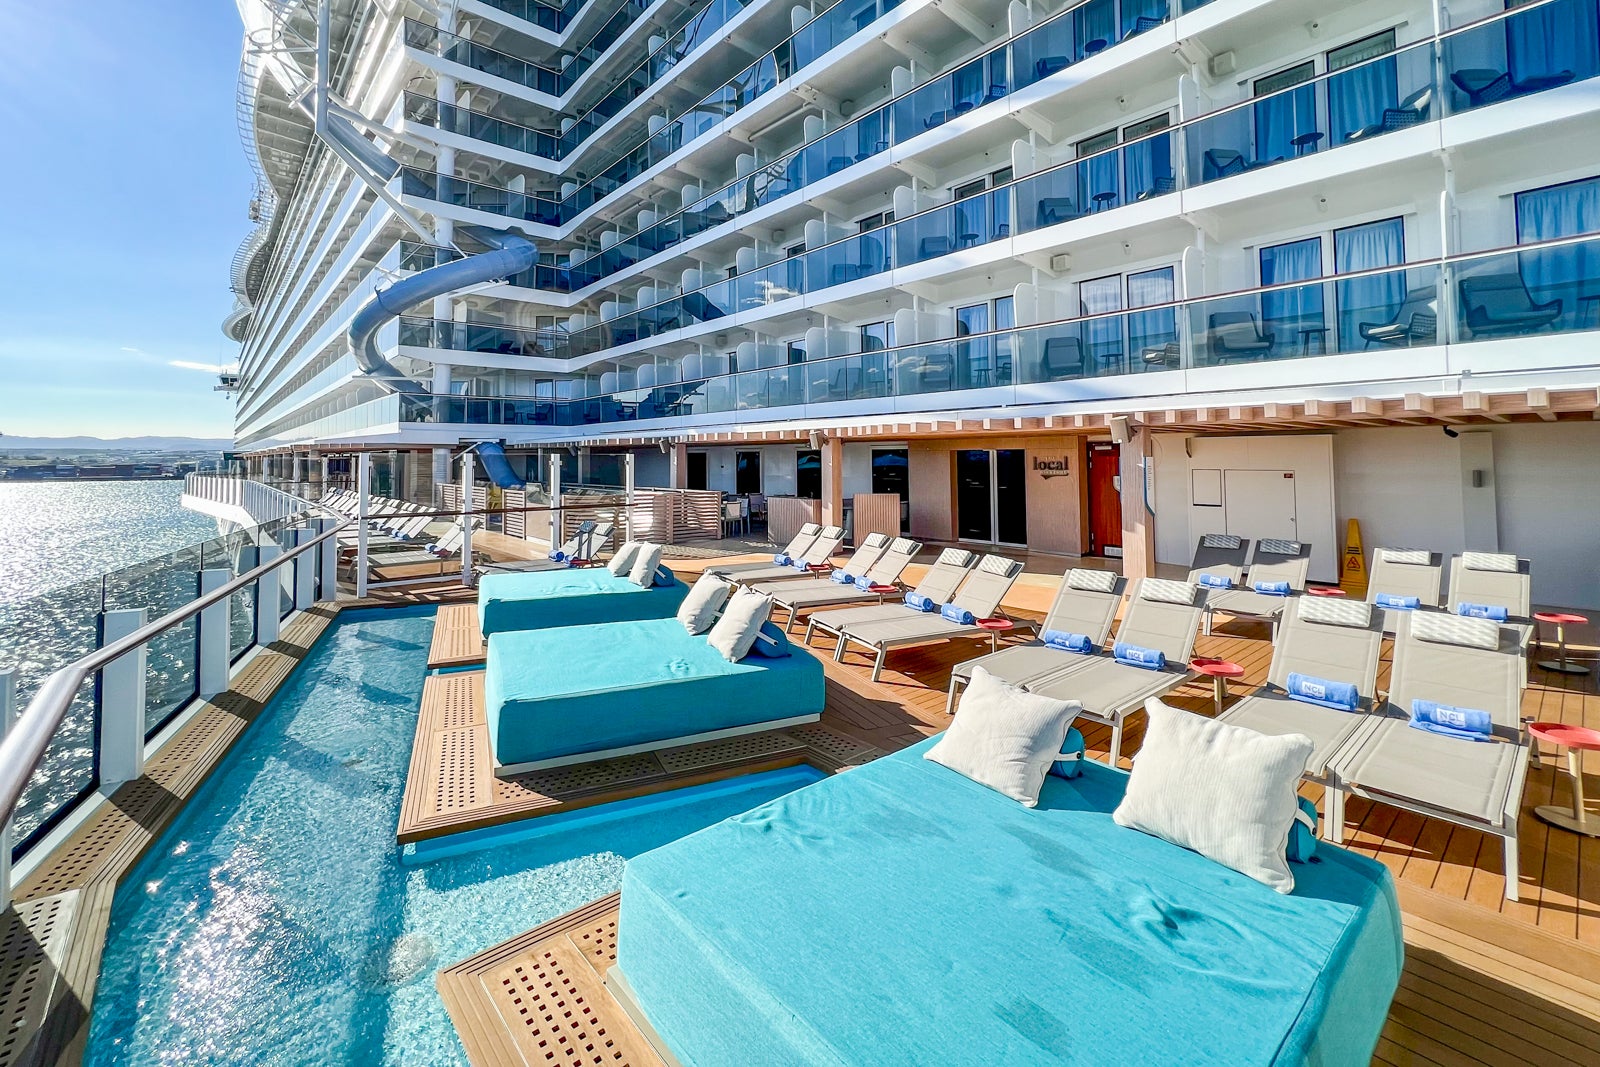 pool deck on cruise